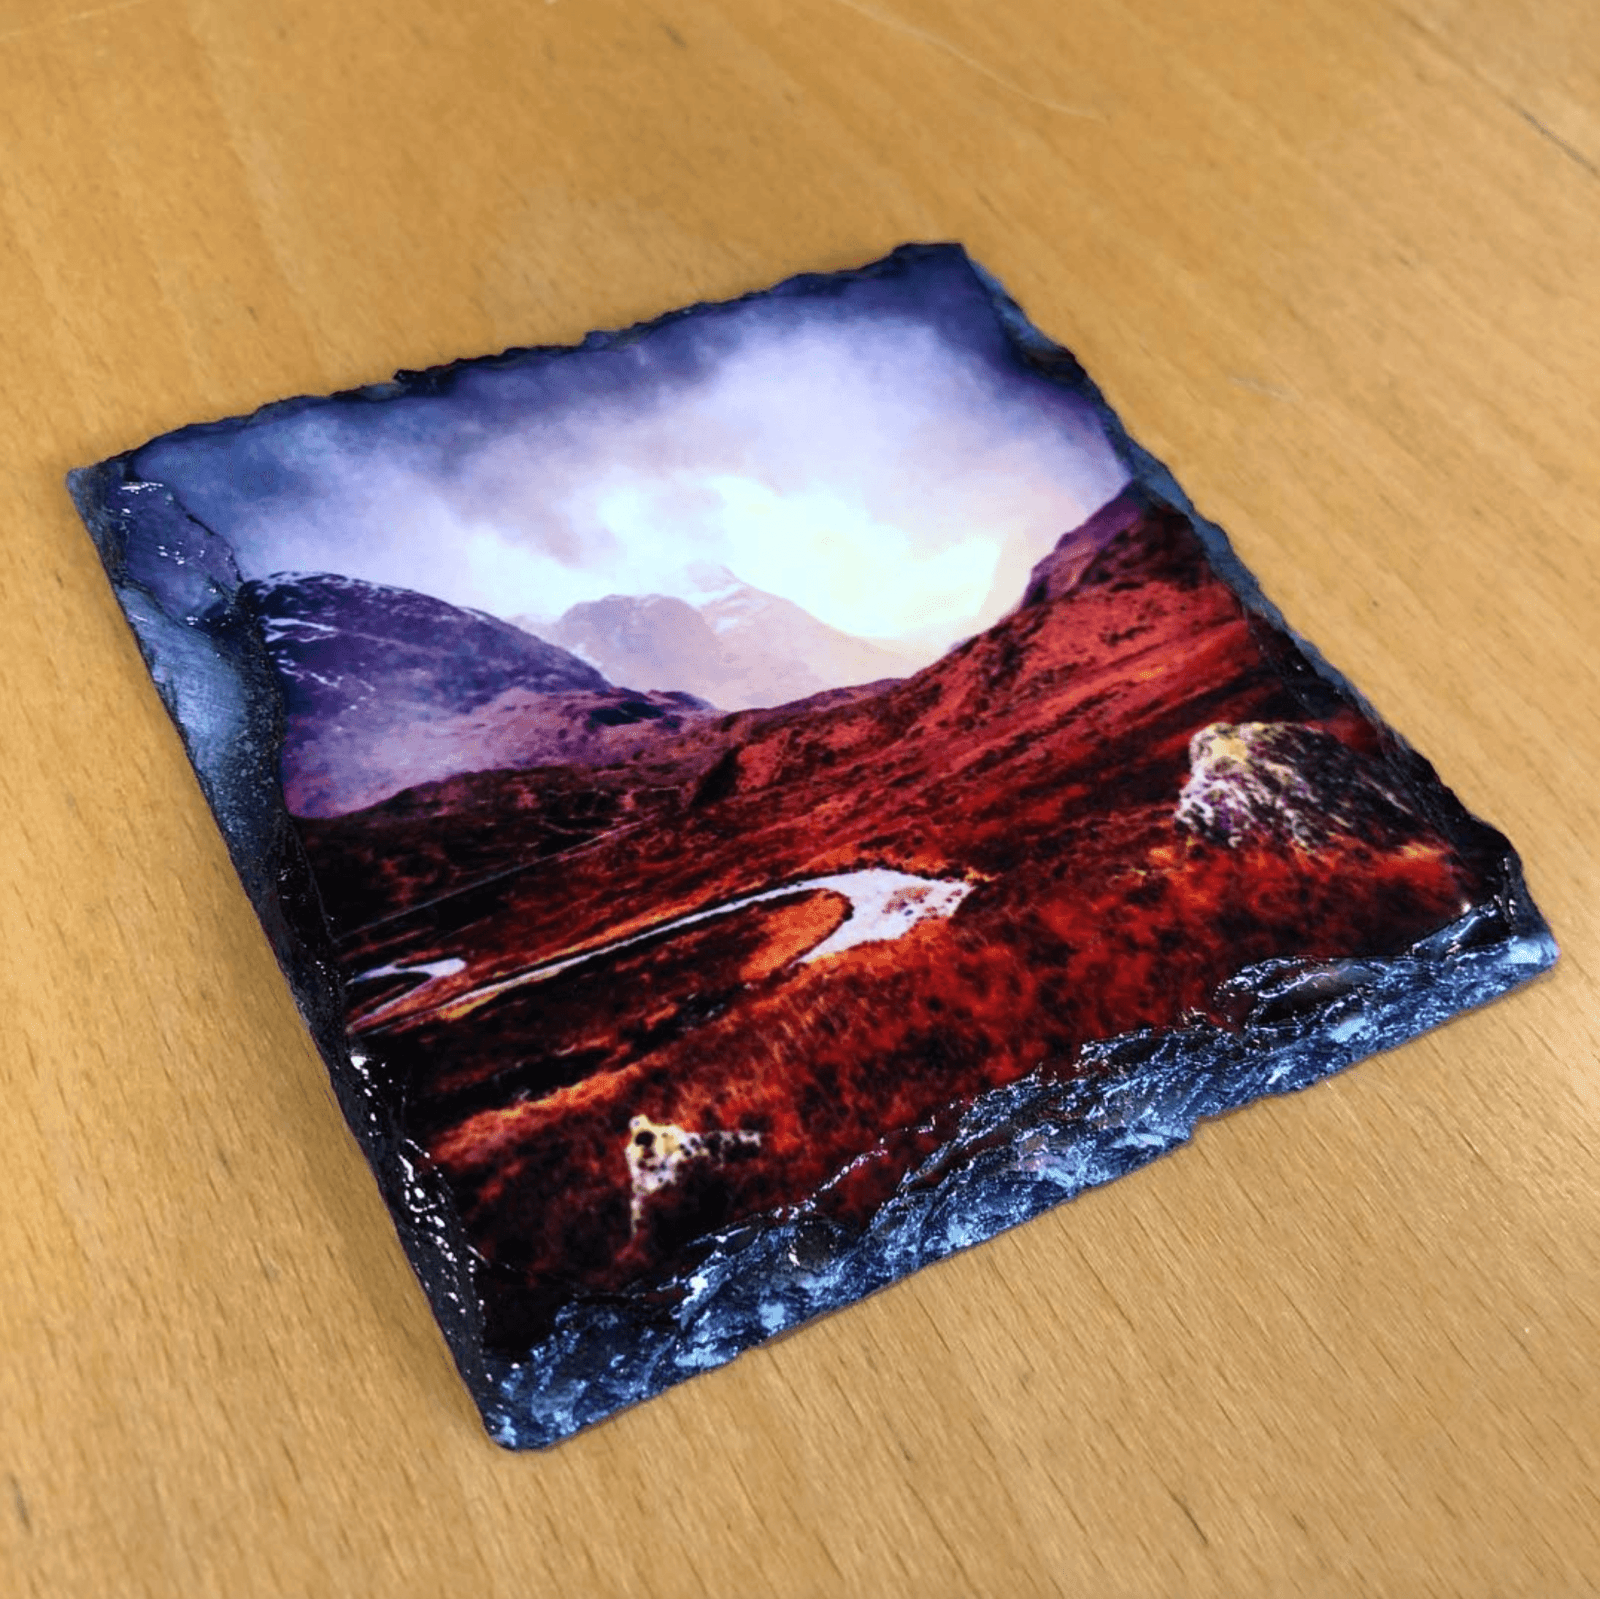 Loch Faskally Dusk Scottish Slate Art-Slate Art-Scottish Lochs & Mountains Art Gallery-Paintings, Prints, Homeware, Art Gifts From Scotland By Scottish Artist Kevin Hunter